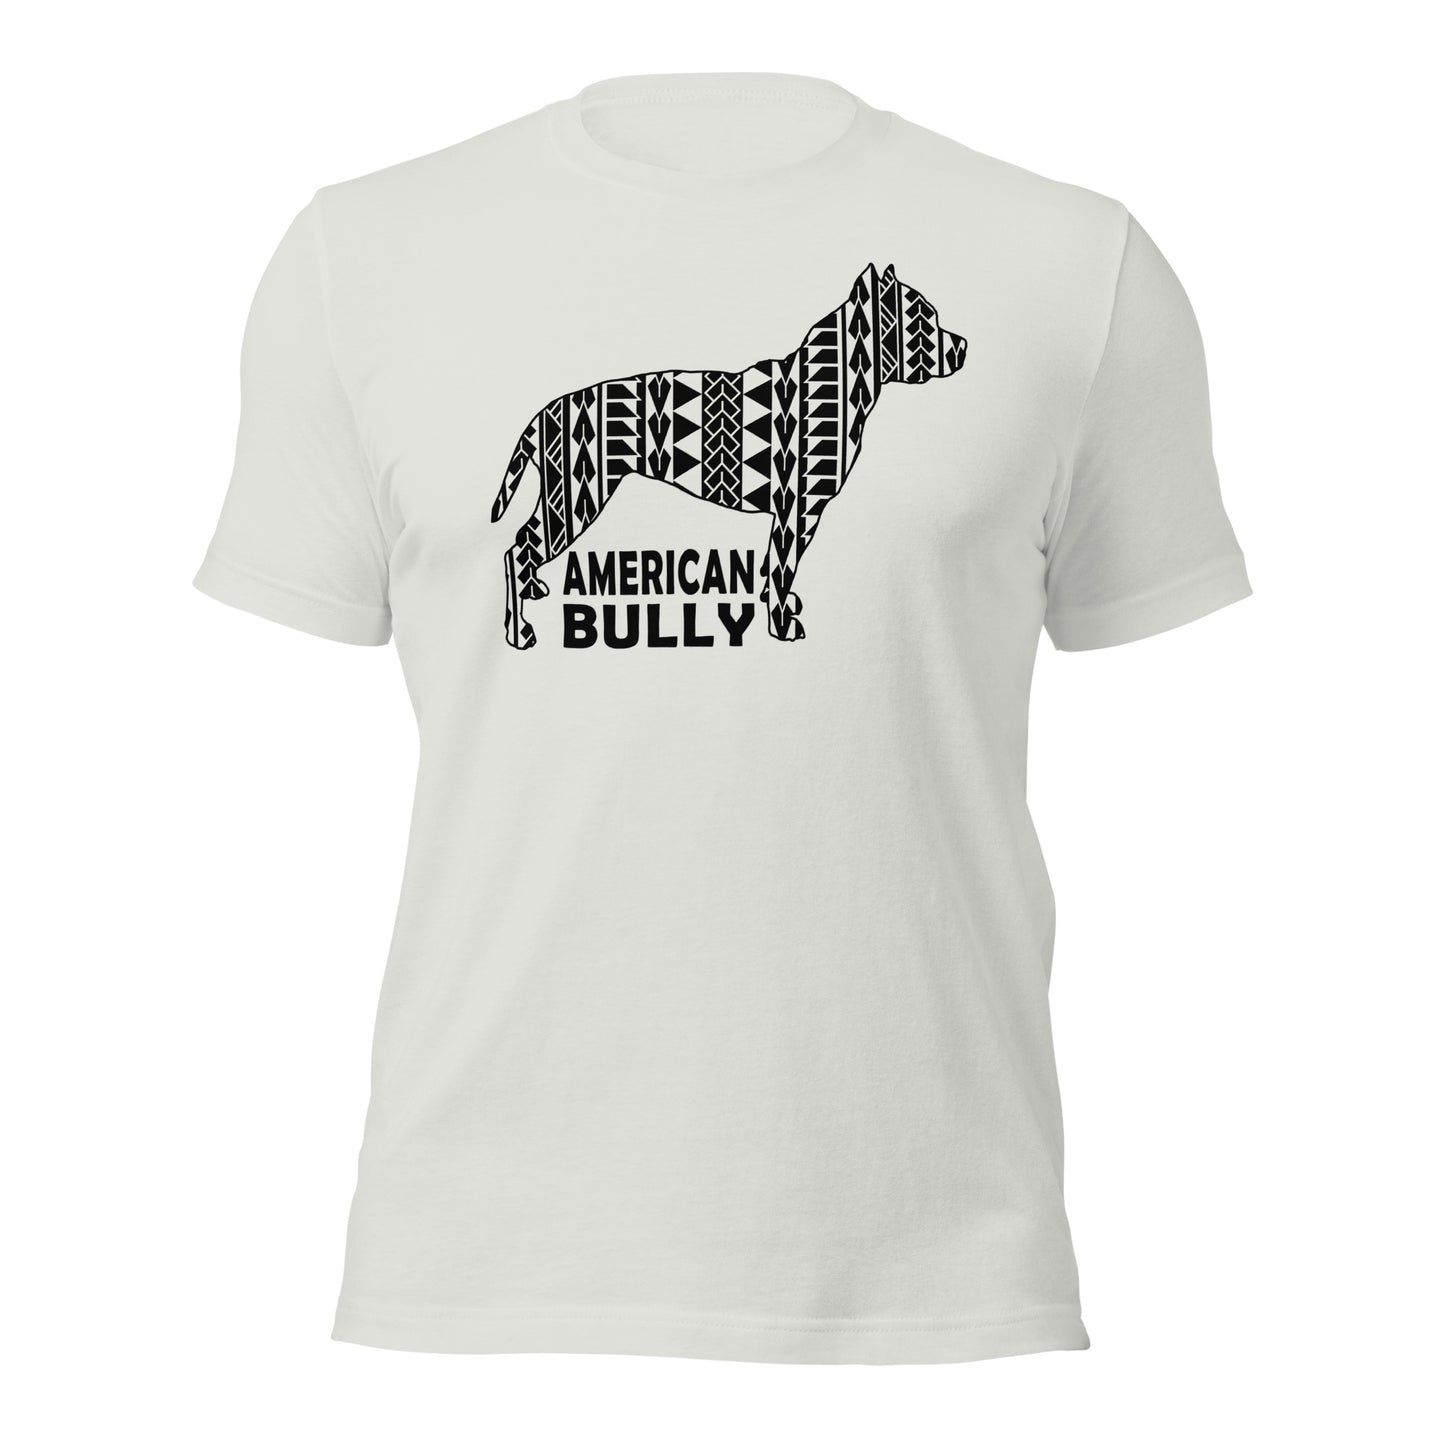 American Bully Polynesian t-shirt silver by Dog Artistry.